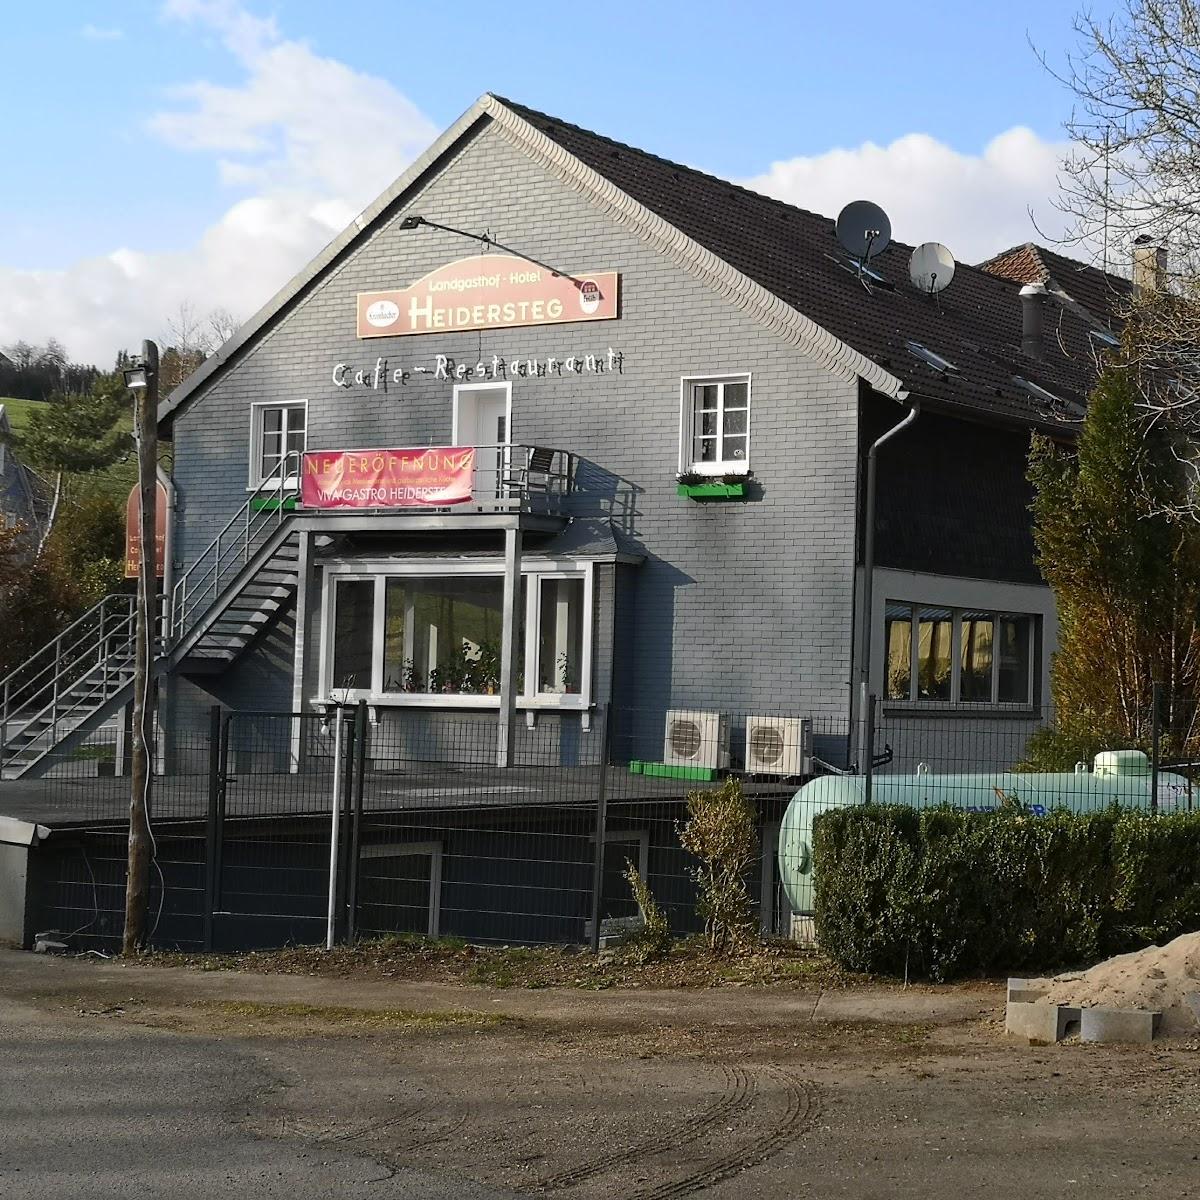 Restaurant "Landgasthof Heidersteg" in Radevormwald